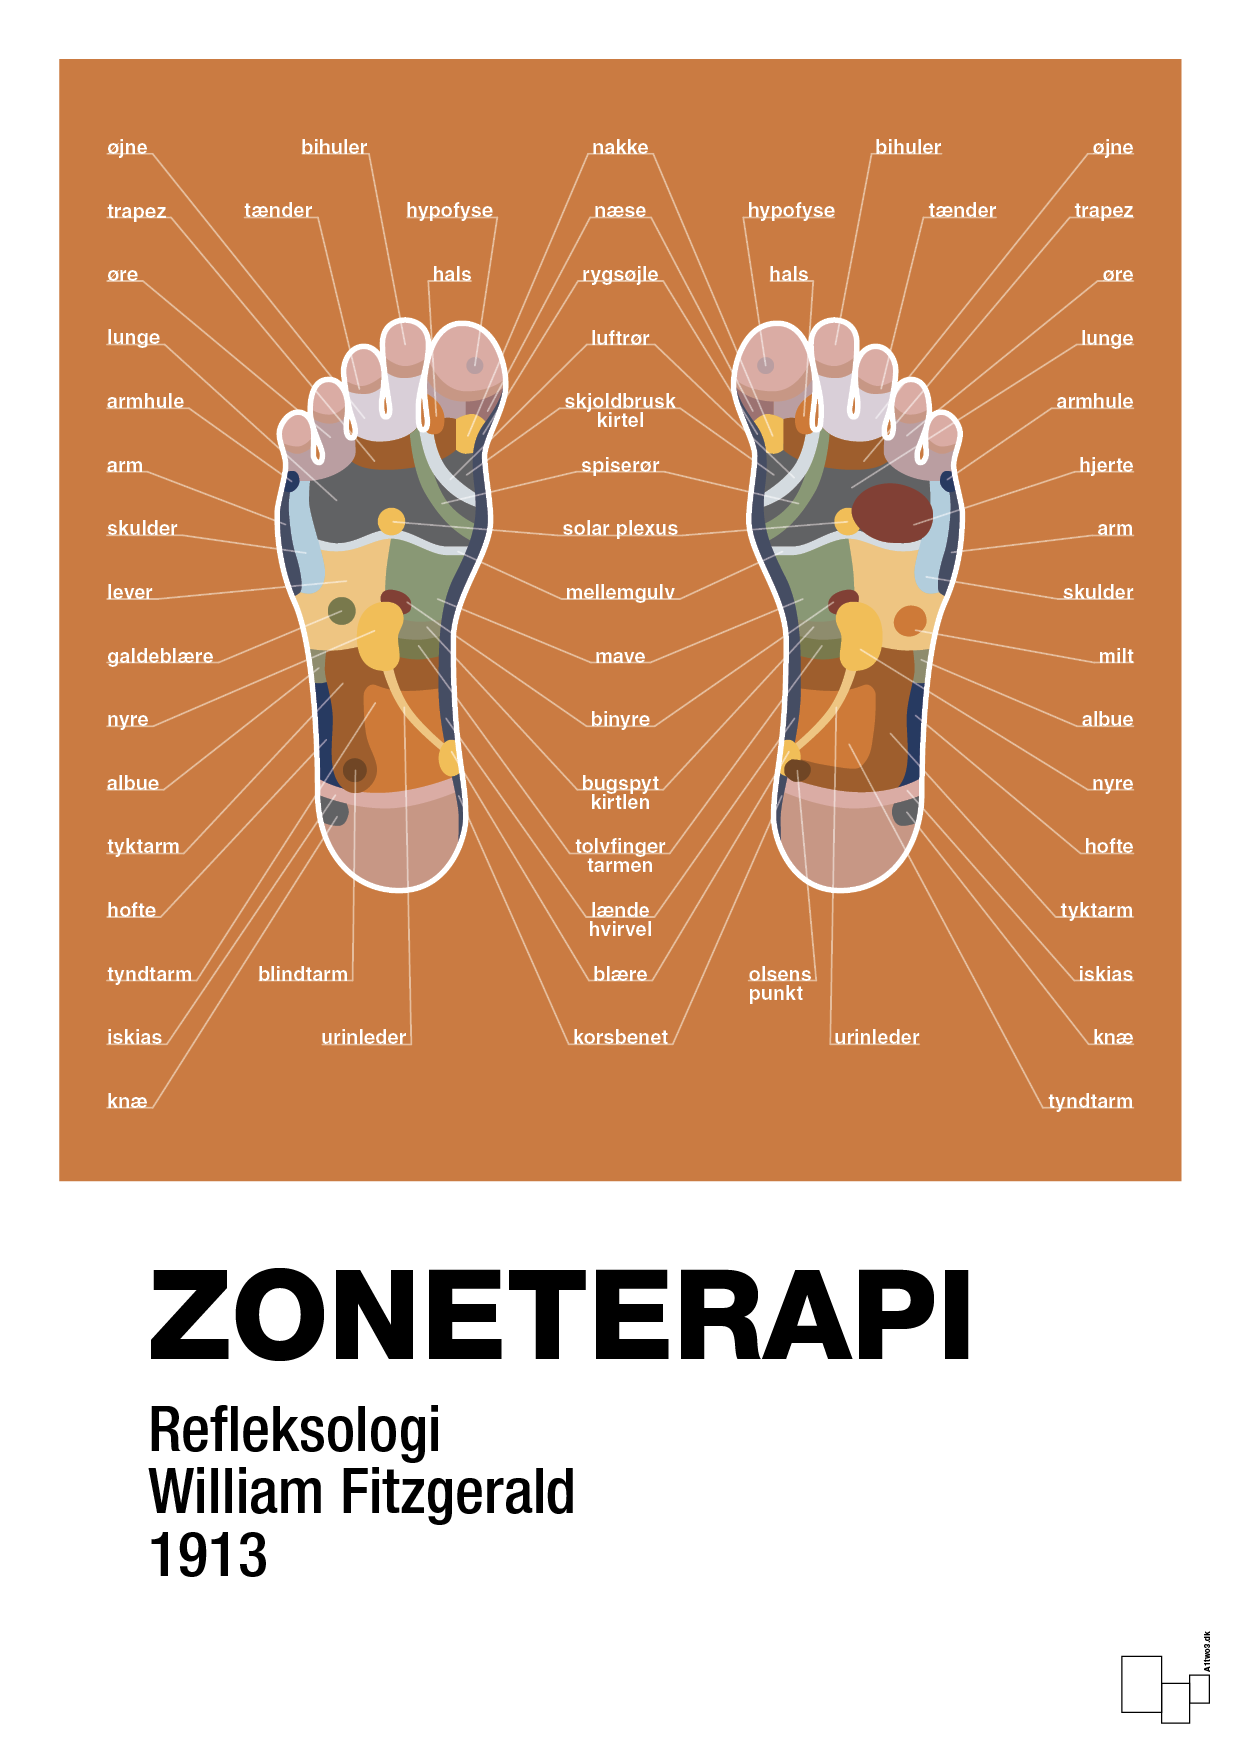 zoneterapi - Plakat med Videnskab i Rumba Orange